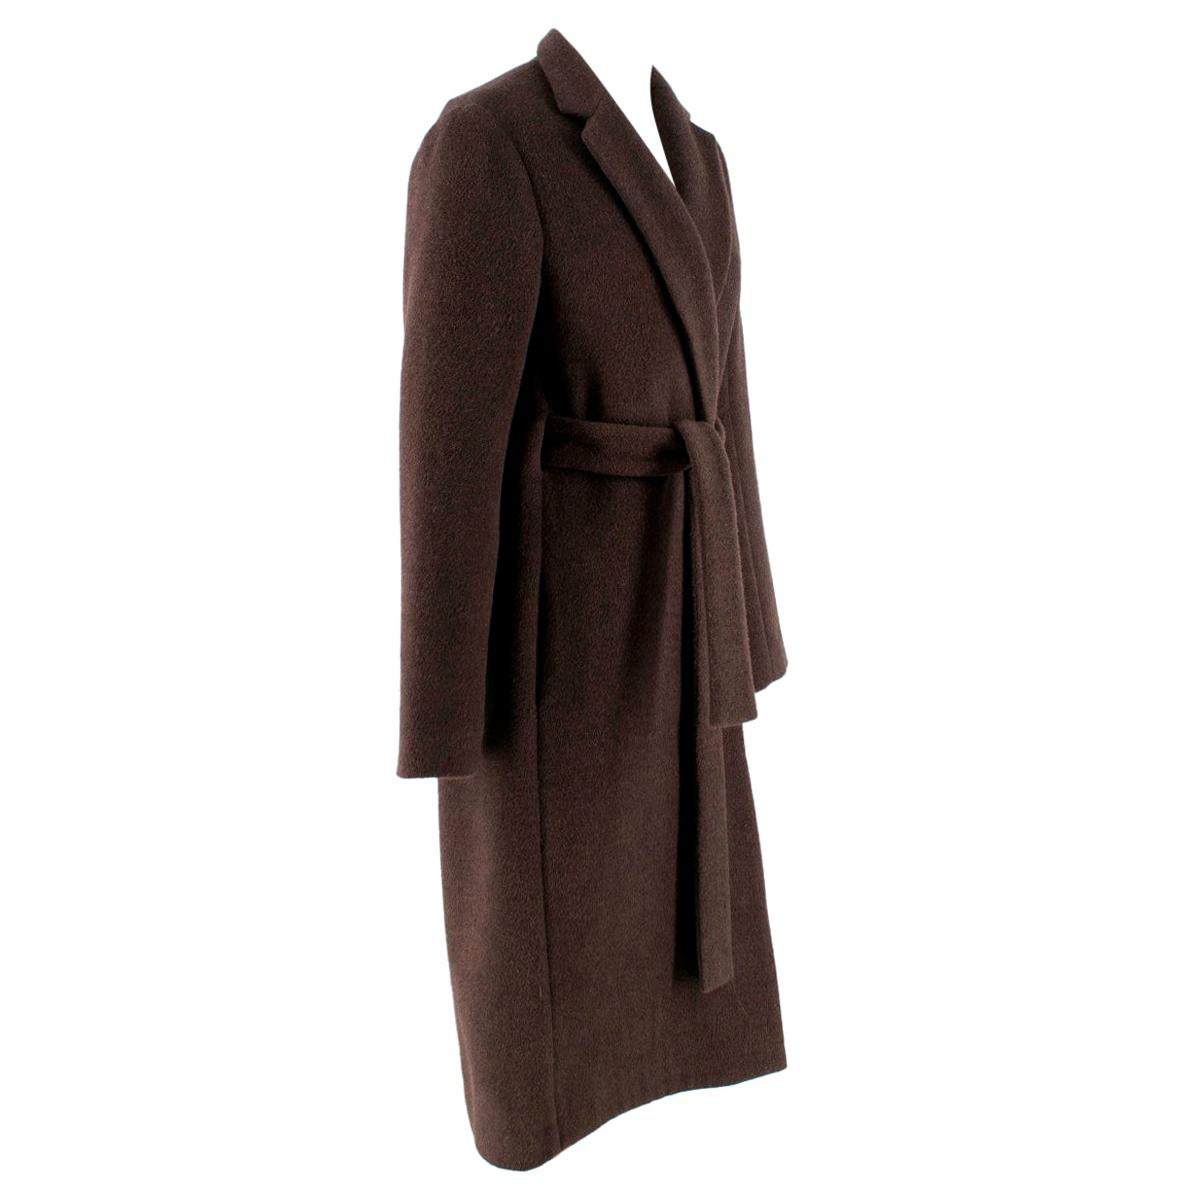 Rosetta Getty brown angora melton tailored coat - New Season - US6 For Sale